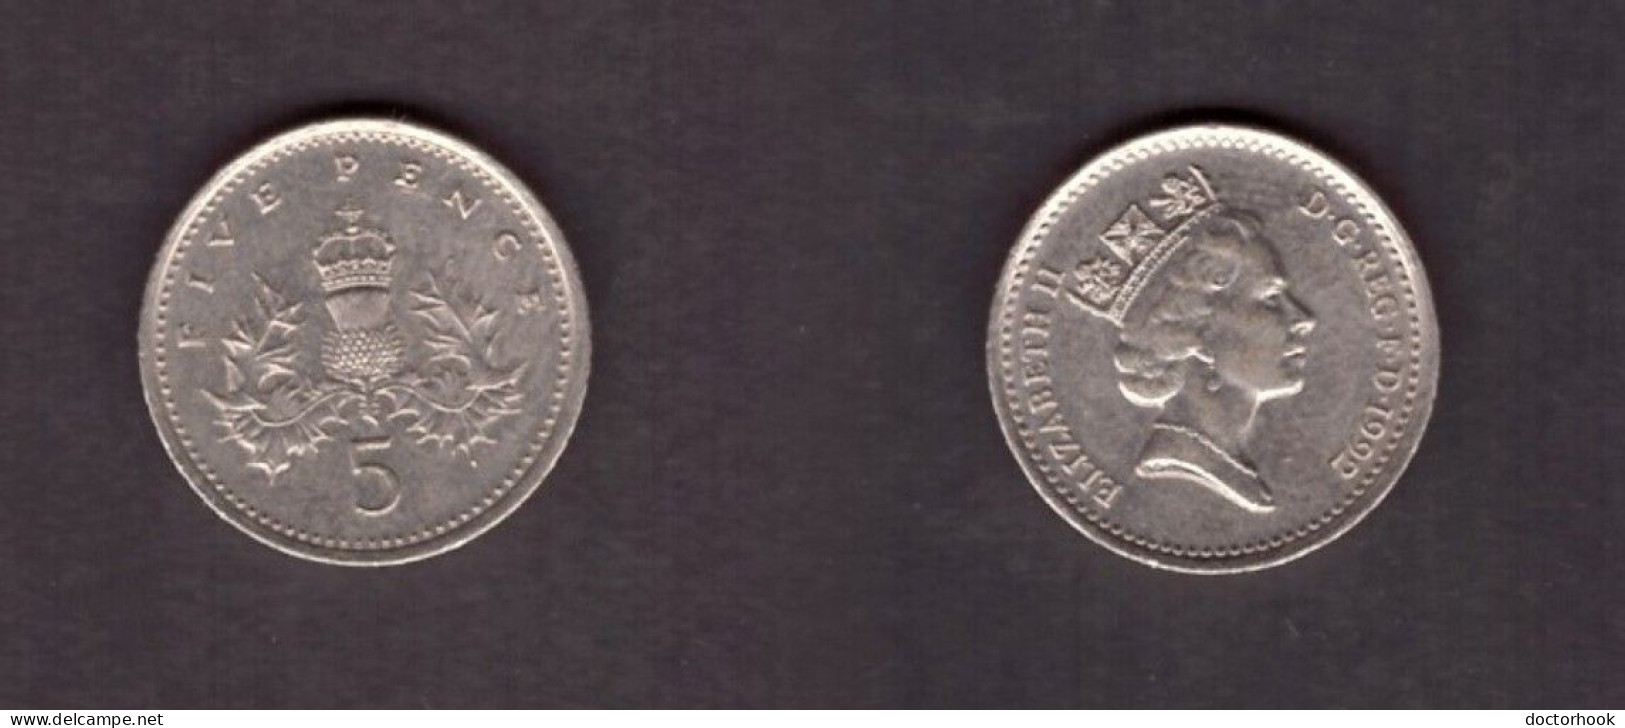 GREAT BRITAIN   5 PENCE 1992 (KM # 937b) #7291 - 5 Pence & 5 New Pence